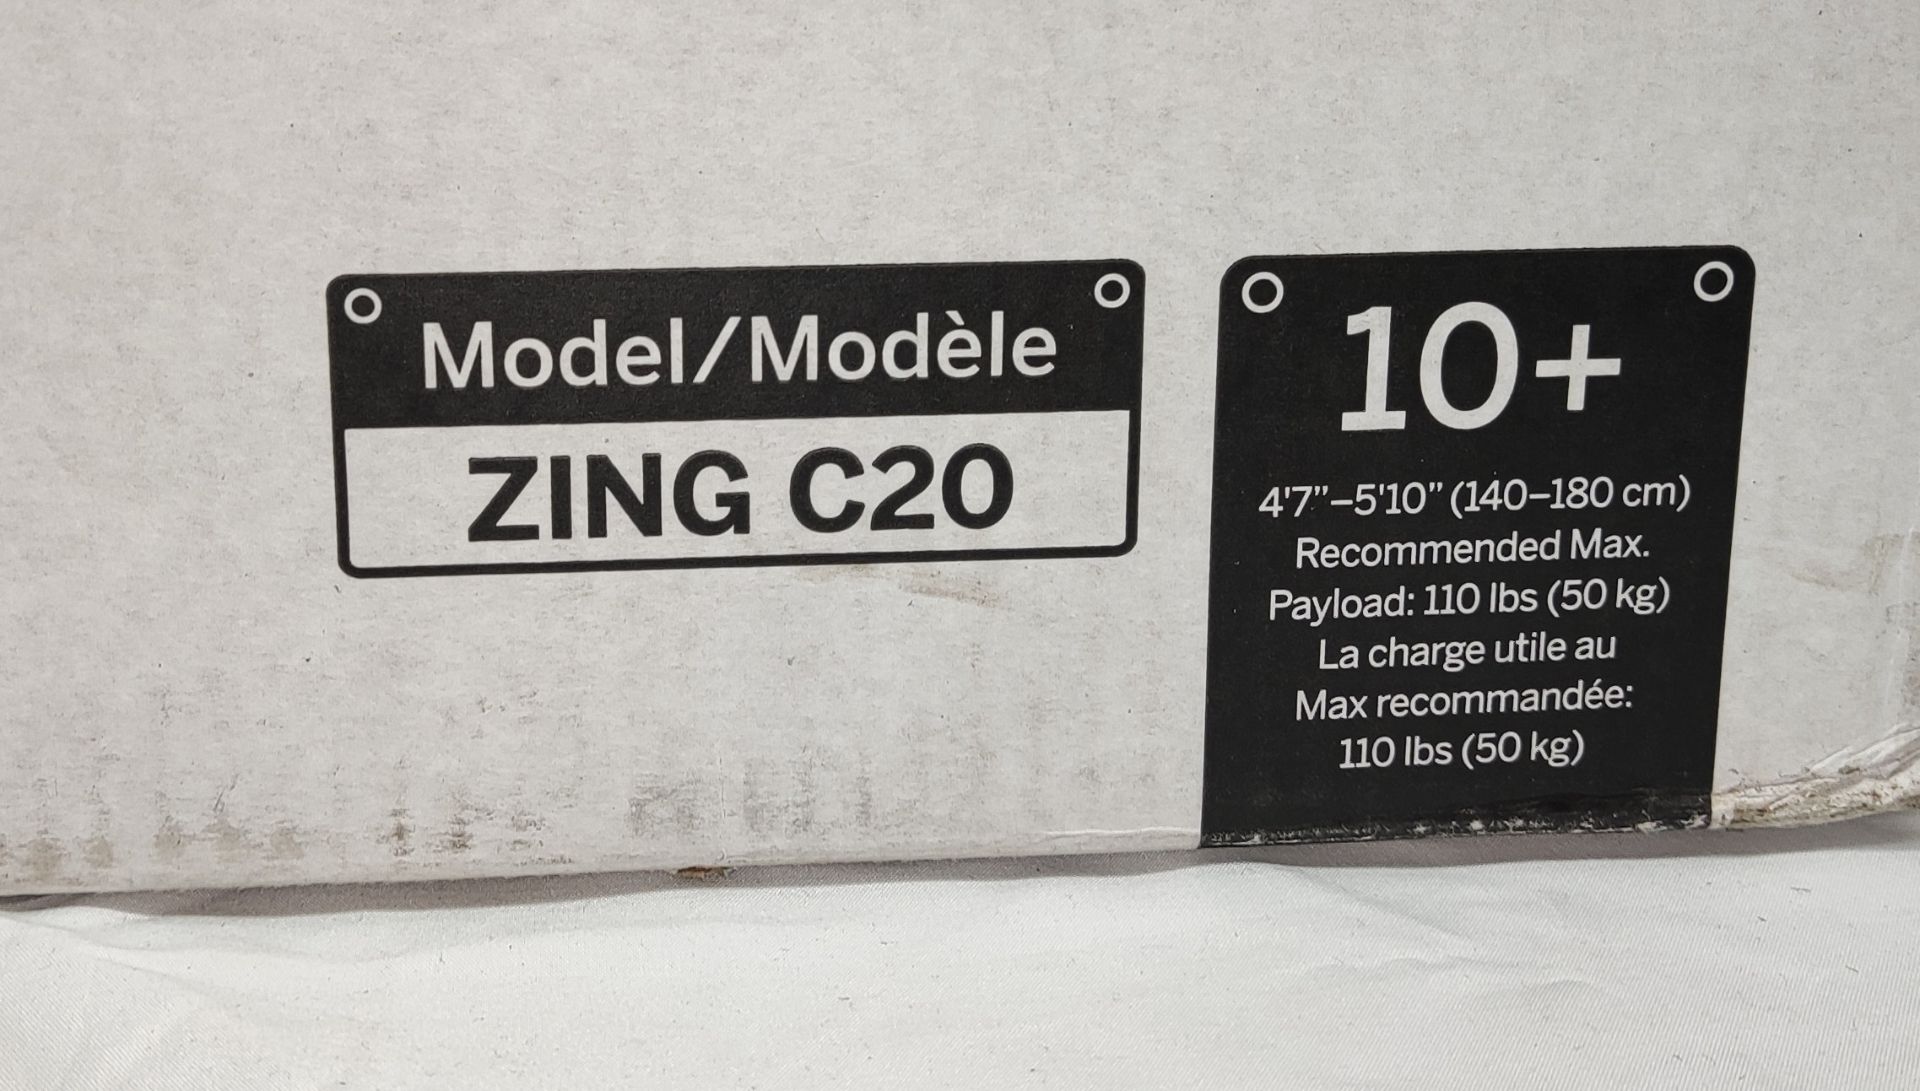 1 x SEGWAY Ninebot Zing C20 Grey Ekickscooter - Unused Boxed Stock - Original RRP £249.00 - Image 7 of 20